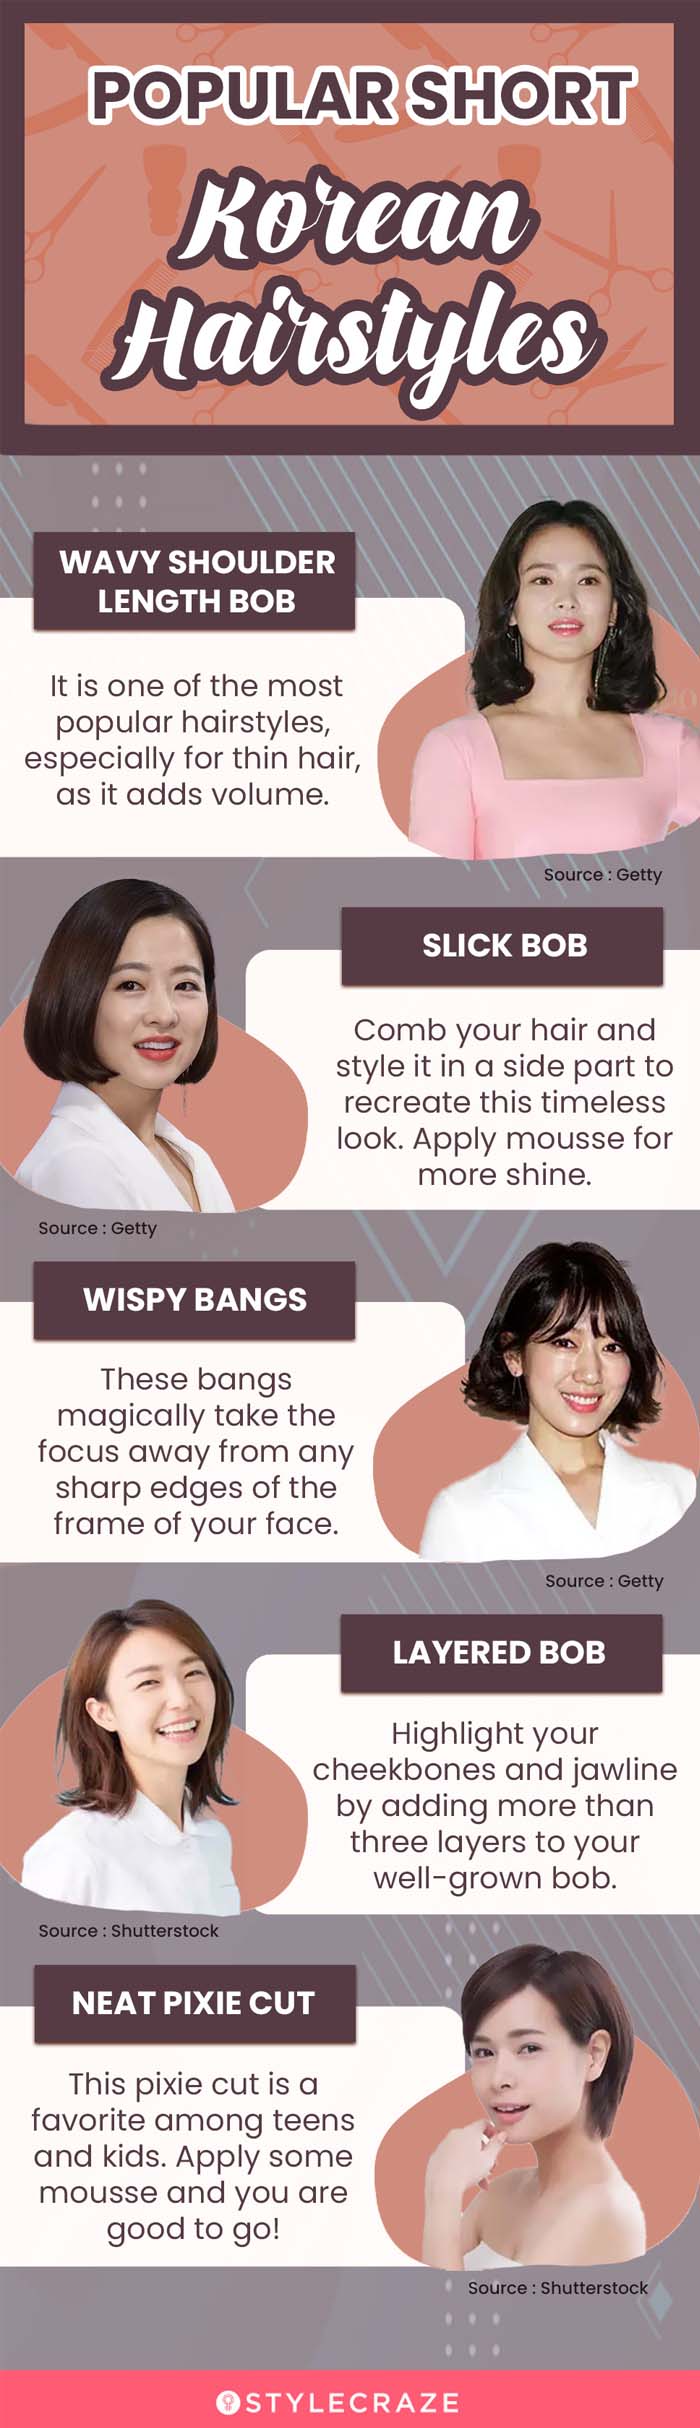 popular short korean hairstyles (infographic)